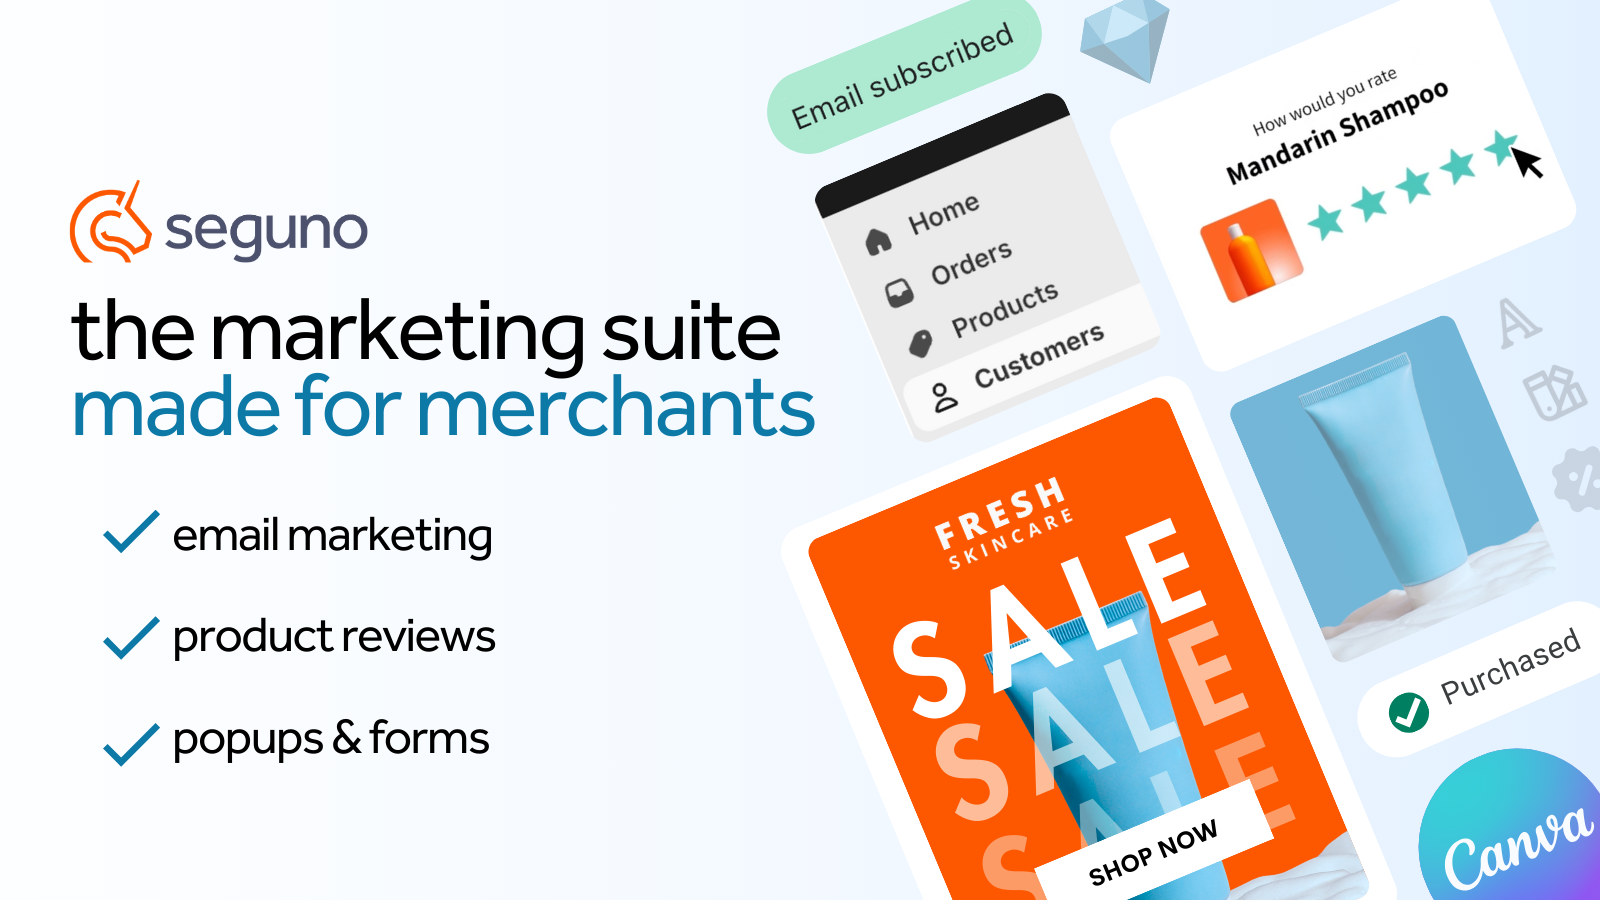 Seguno Marketing Suite：电子邮件营销、产品评论、弹窗